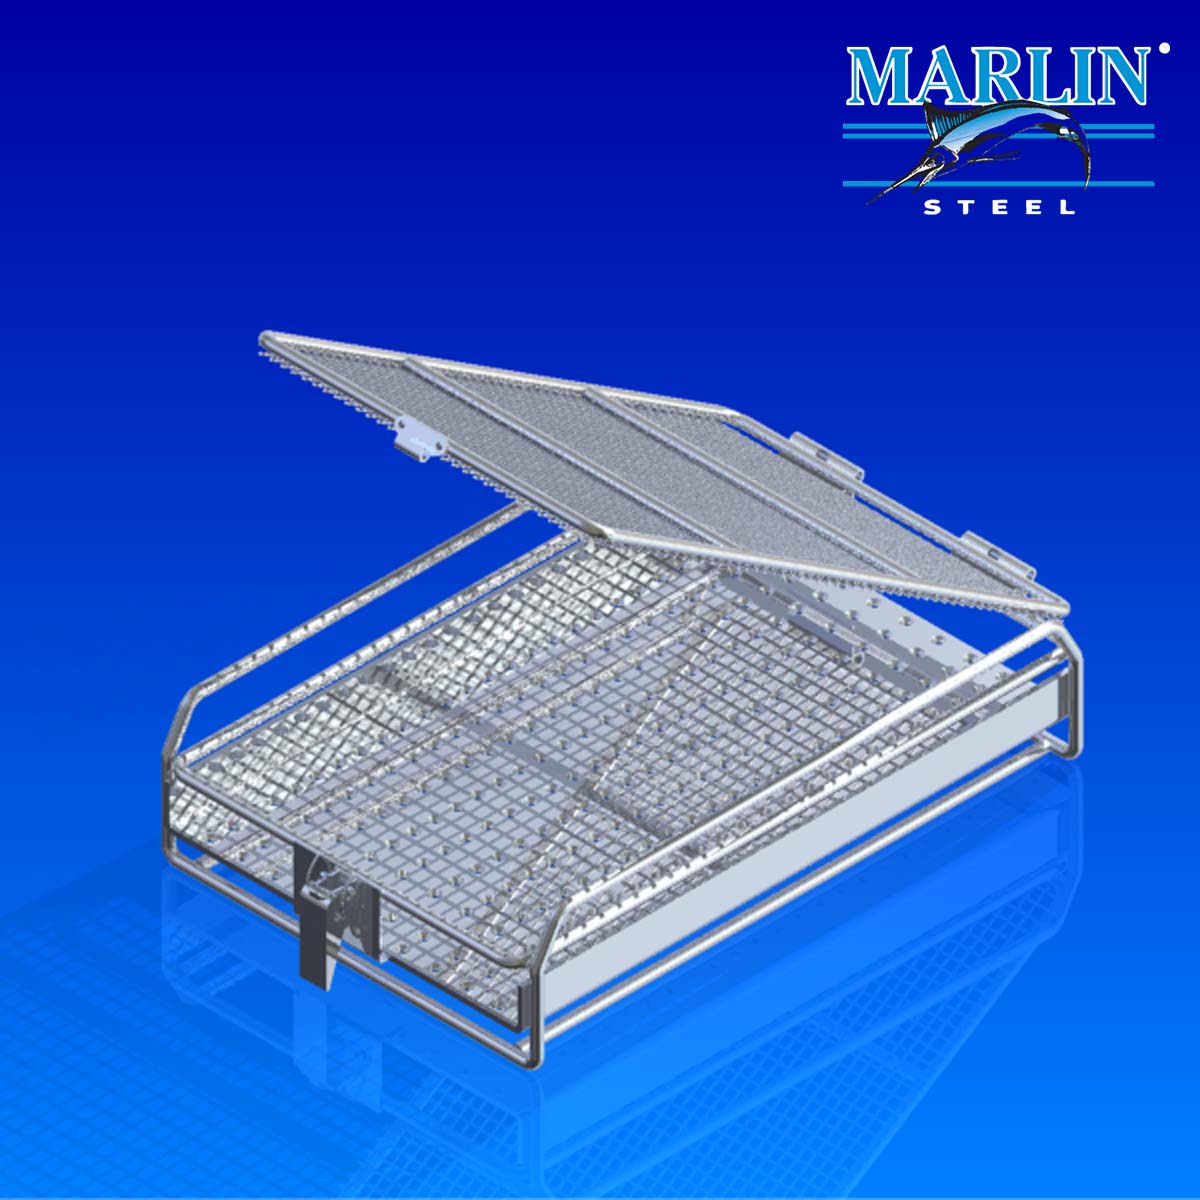 Marlin Steel Wire Basket with Lid 147009-1.jpg